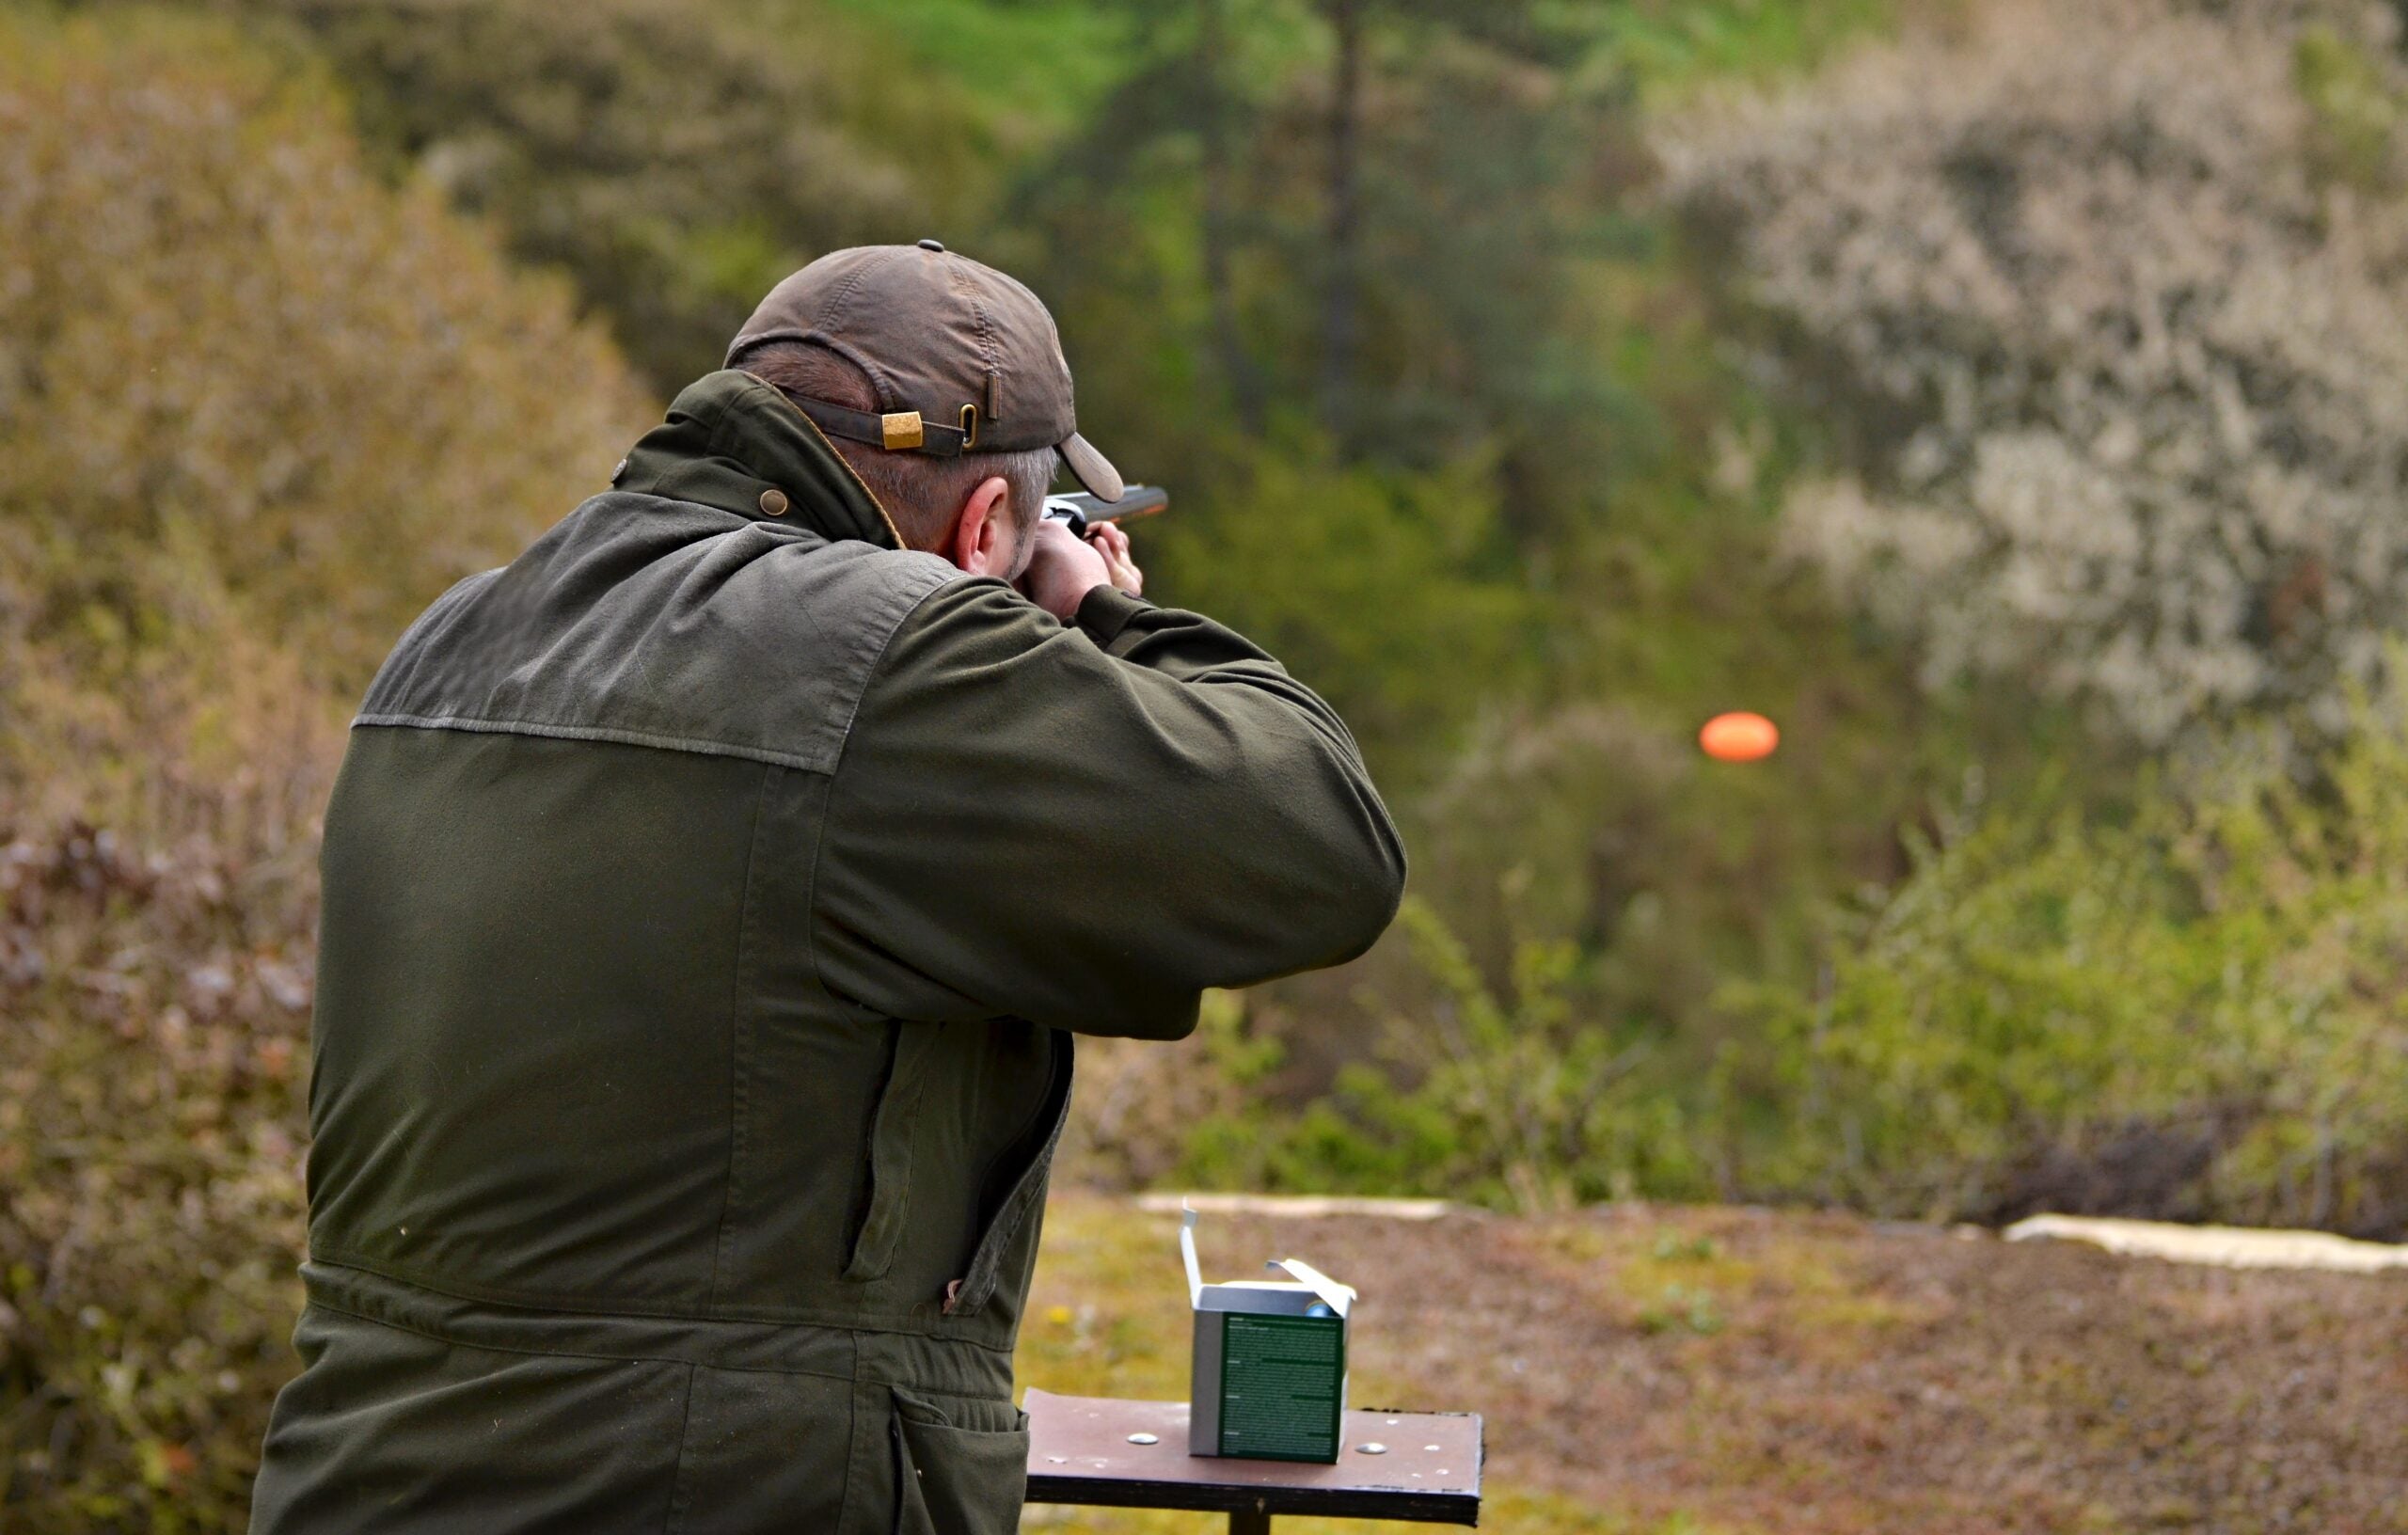 A photo of a man shooting clays at a gun range